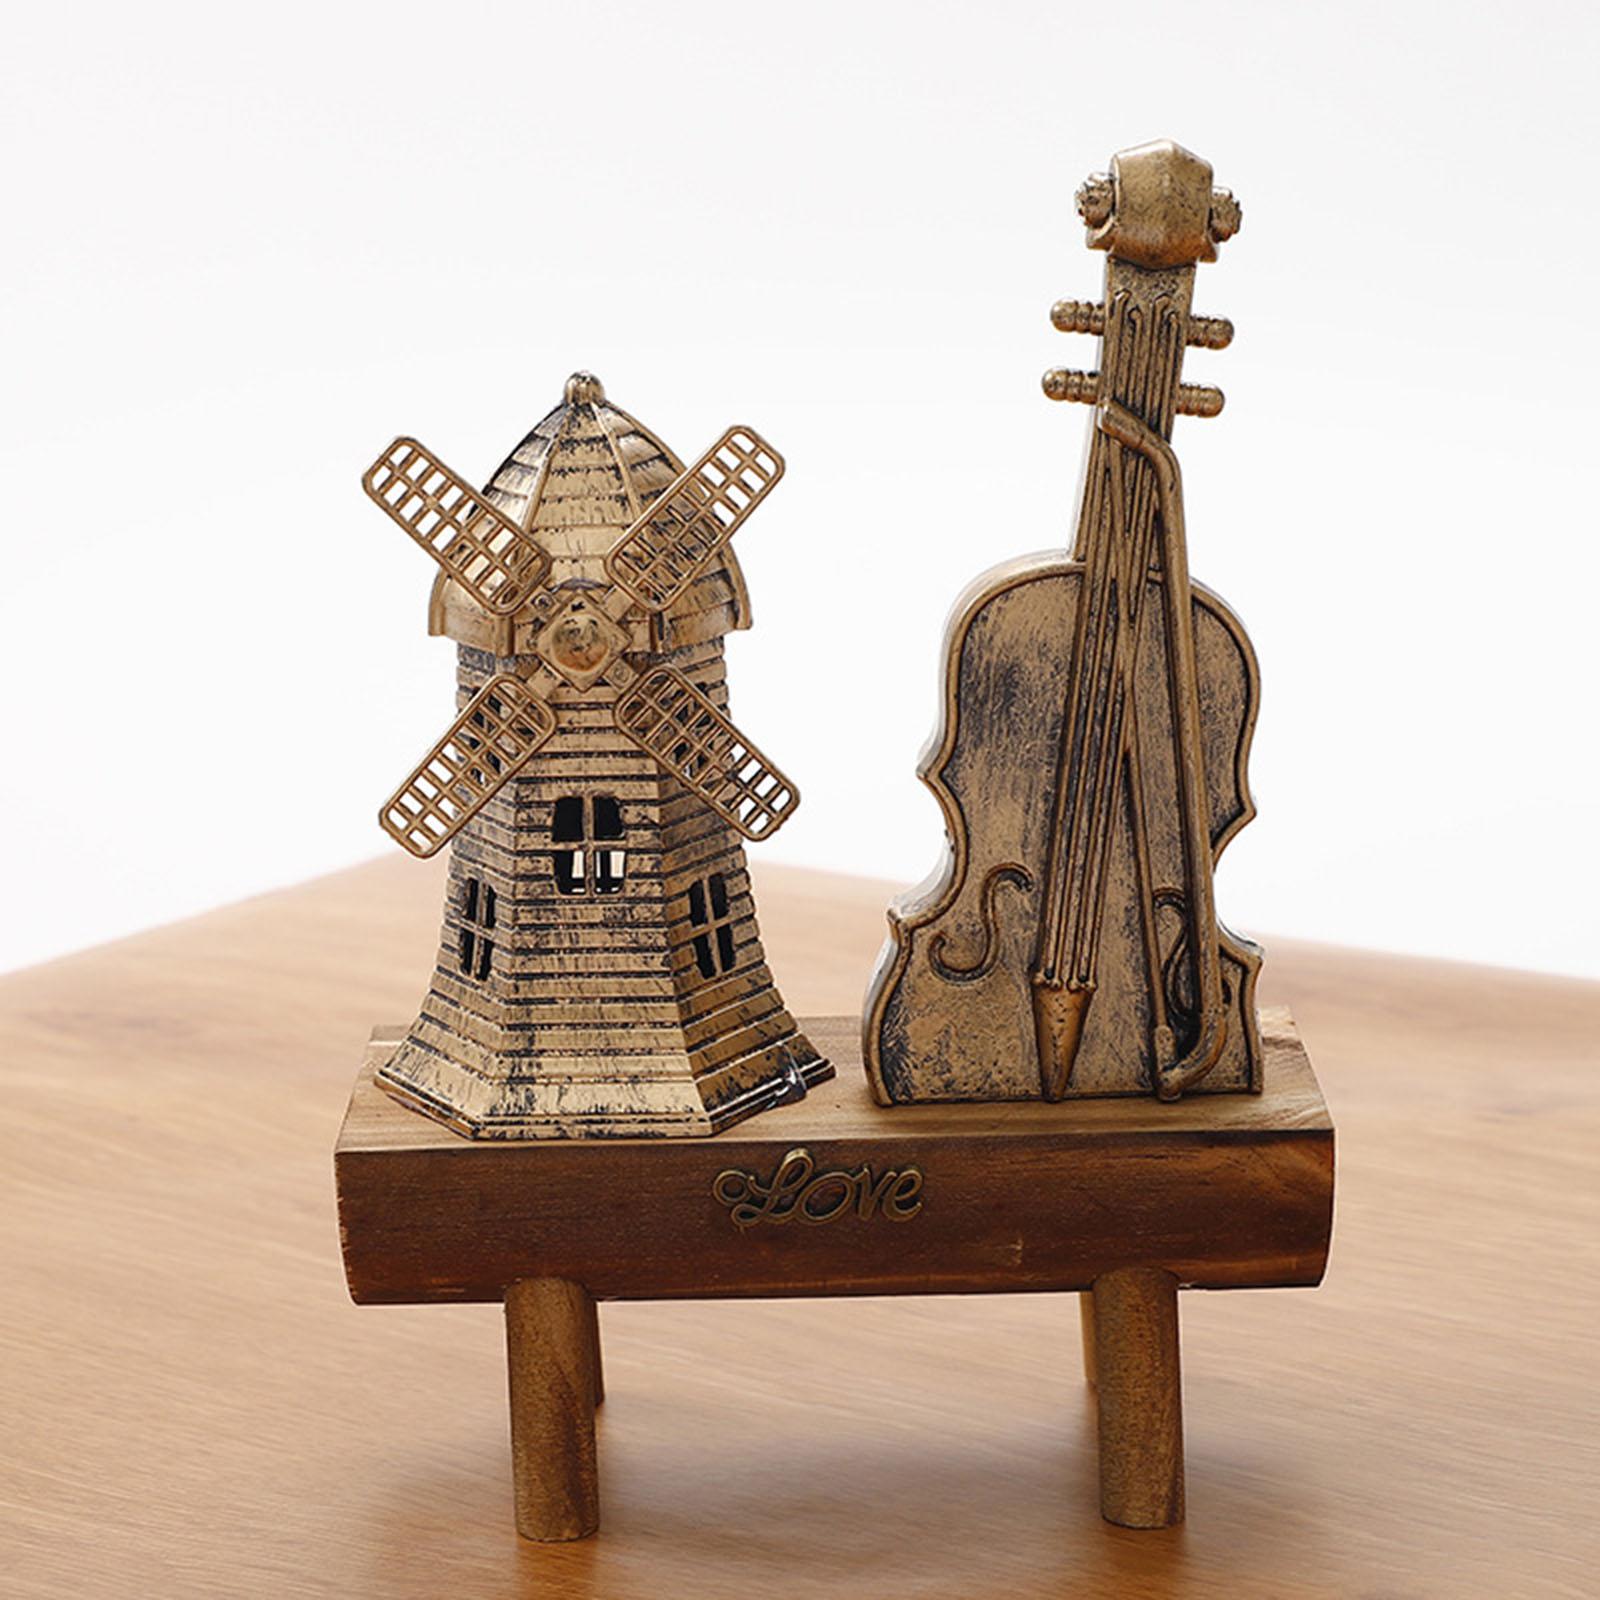 Miniature Wooden Model Crafts Ornament Kids Gift for Desktop Home Decor Windmill